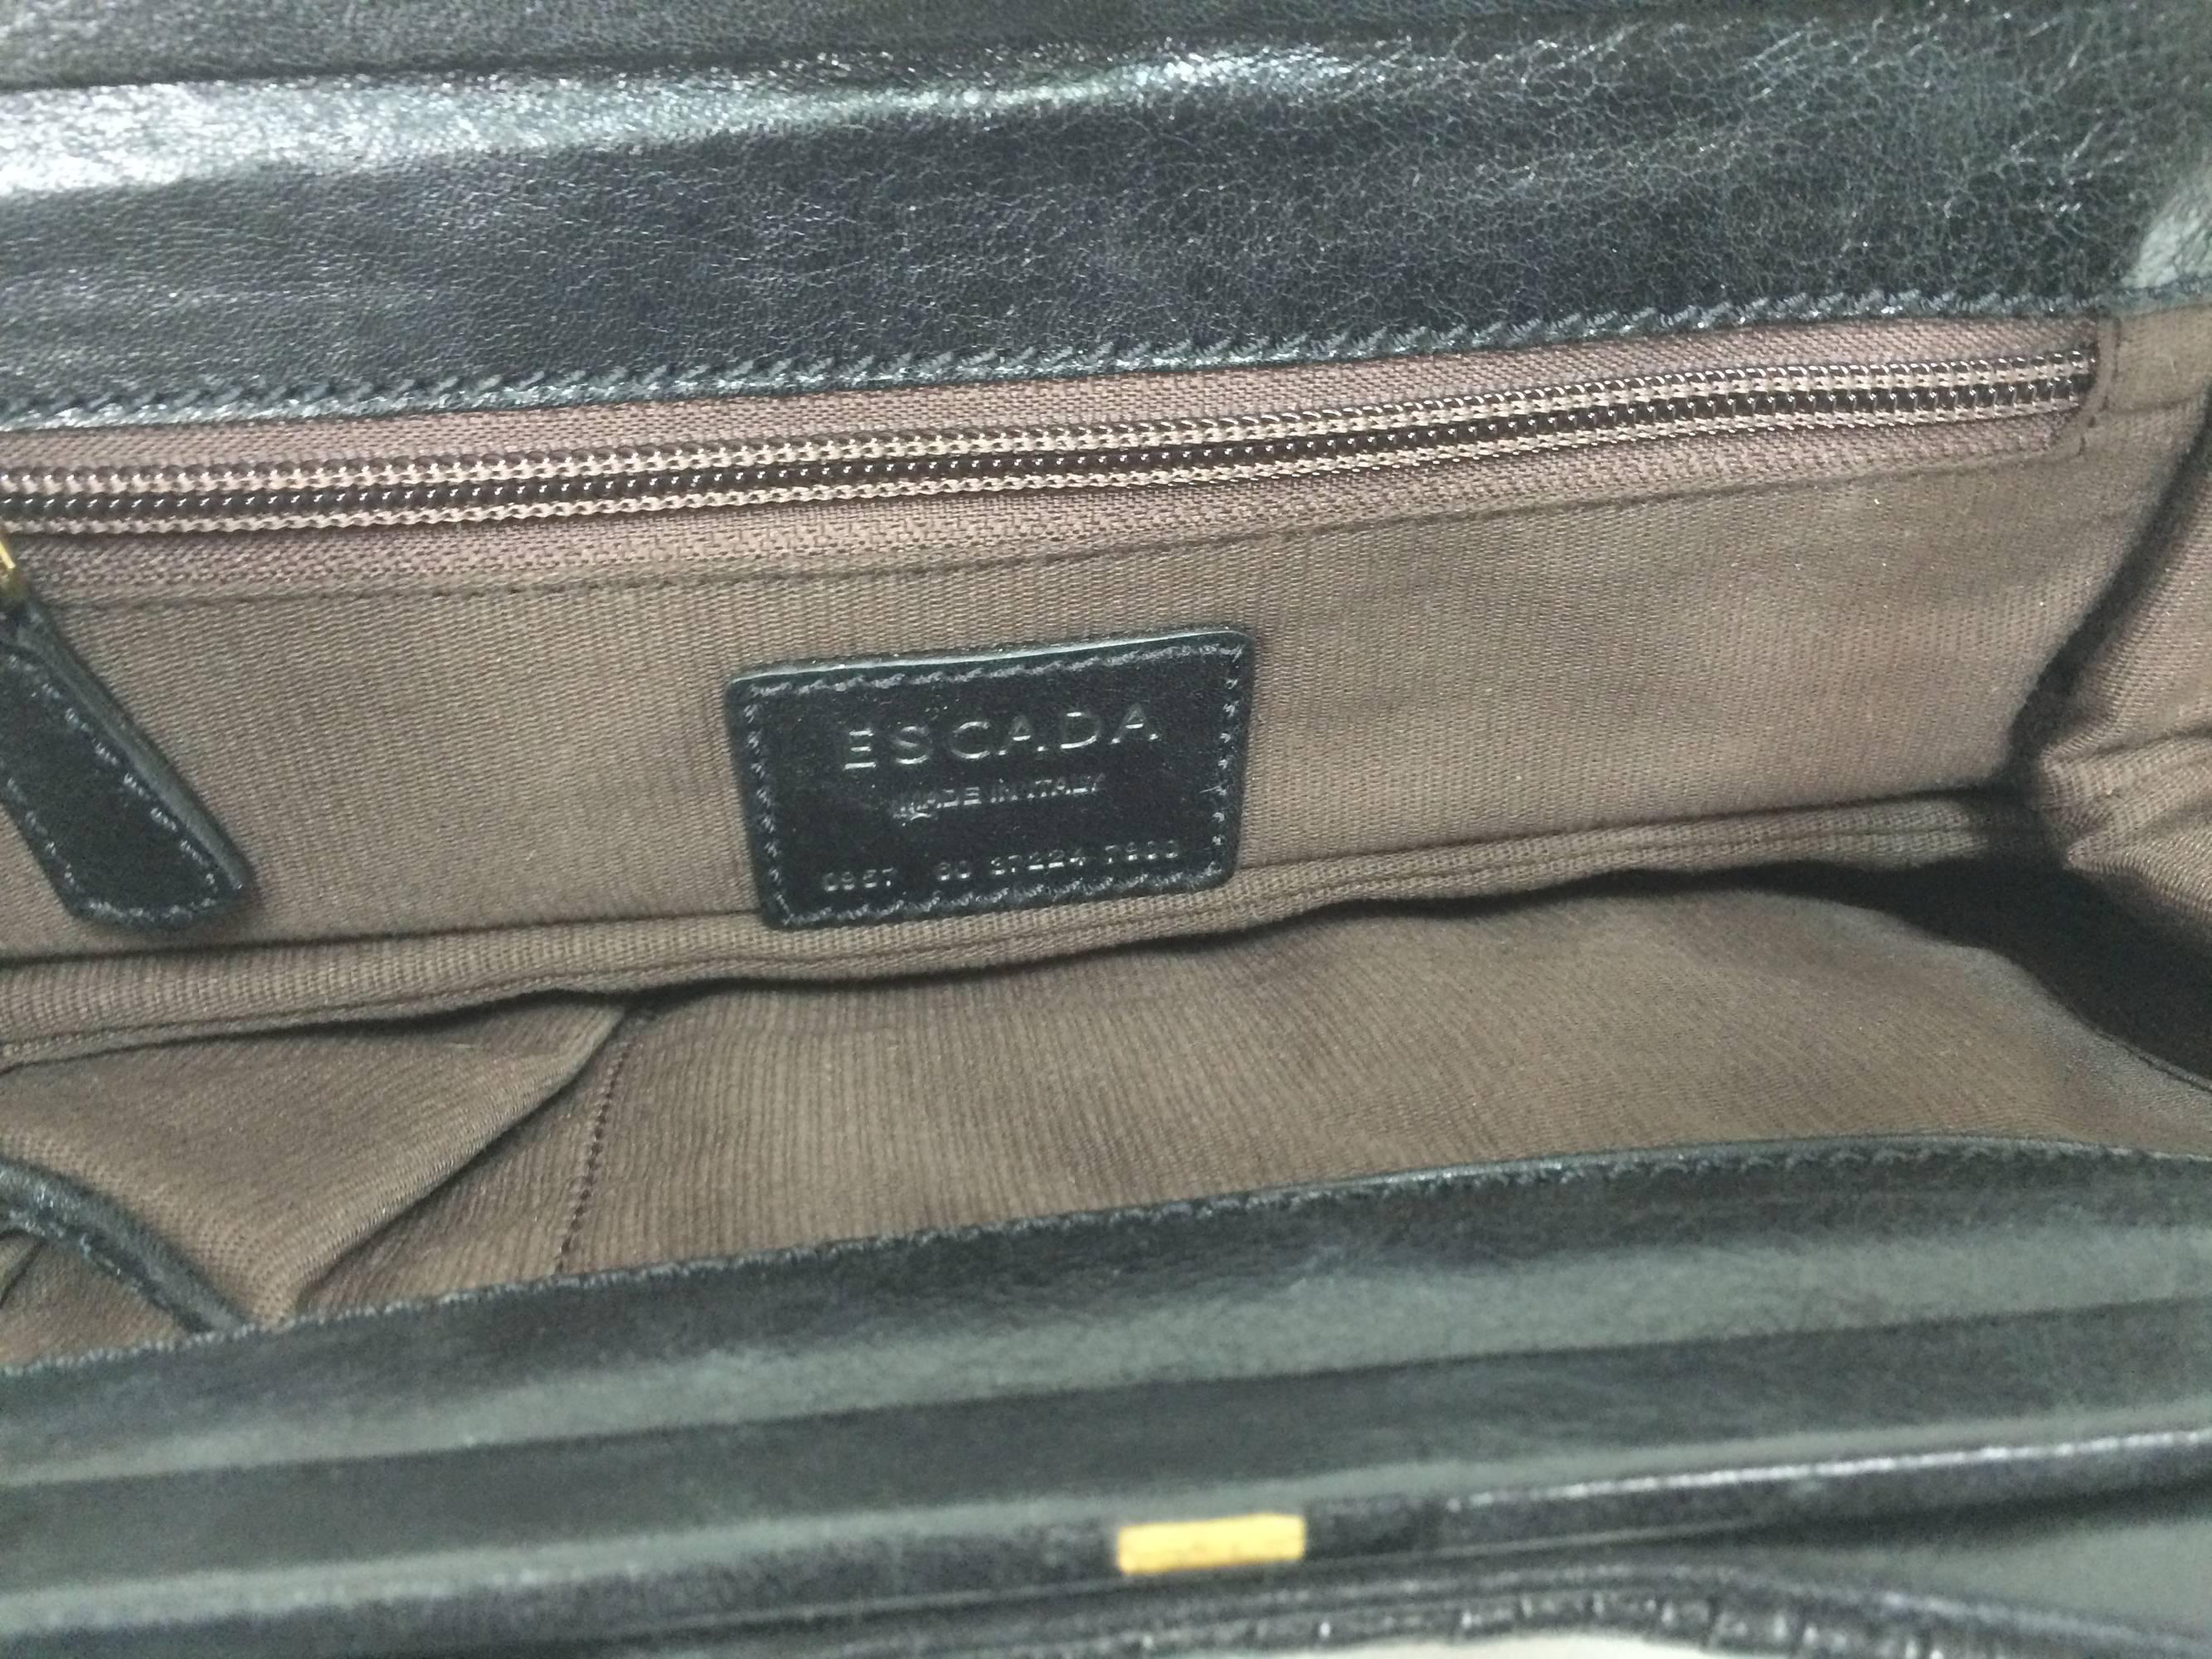 Escada black leather frame bag convertible clutch or shoulder handbag 1